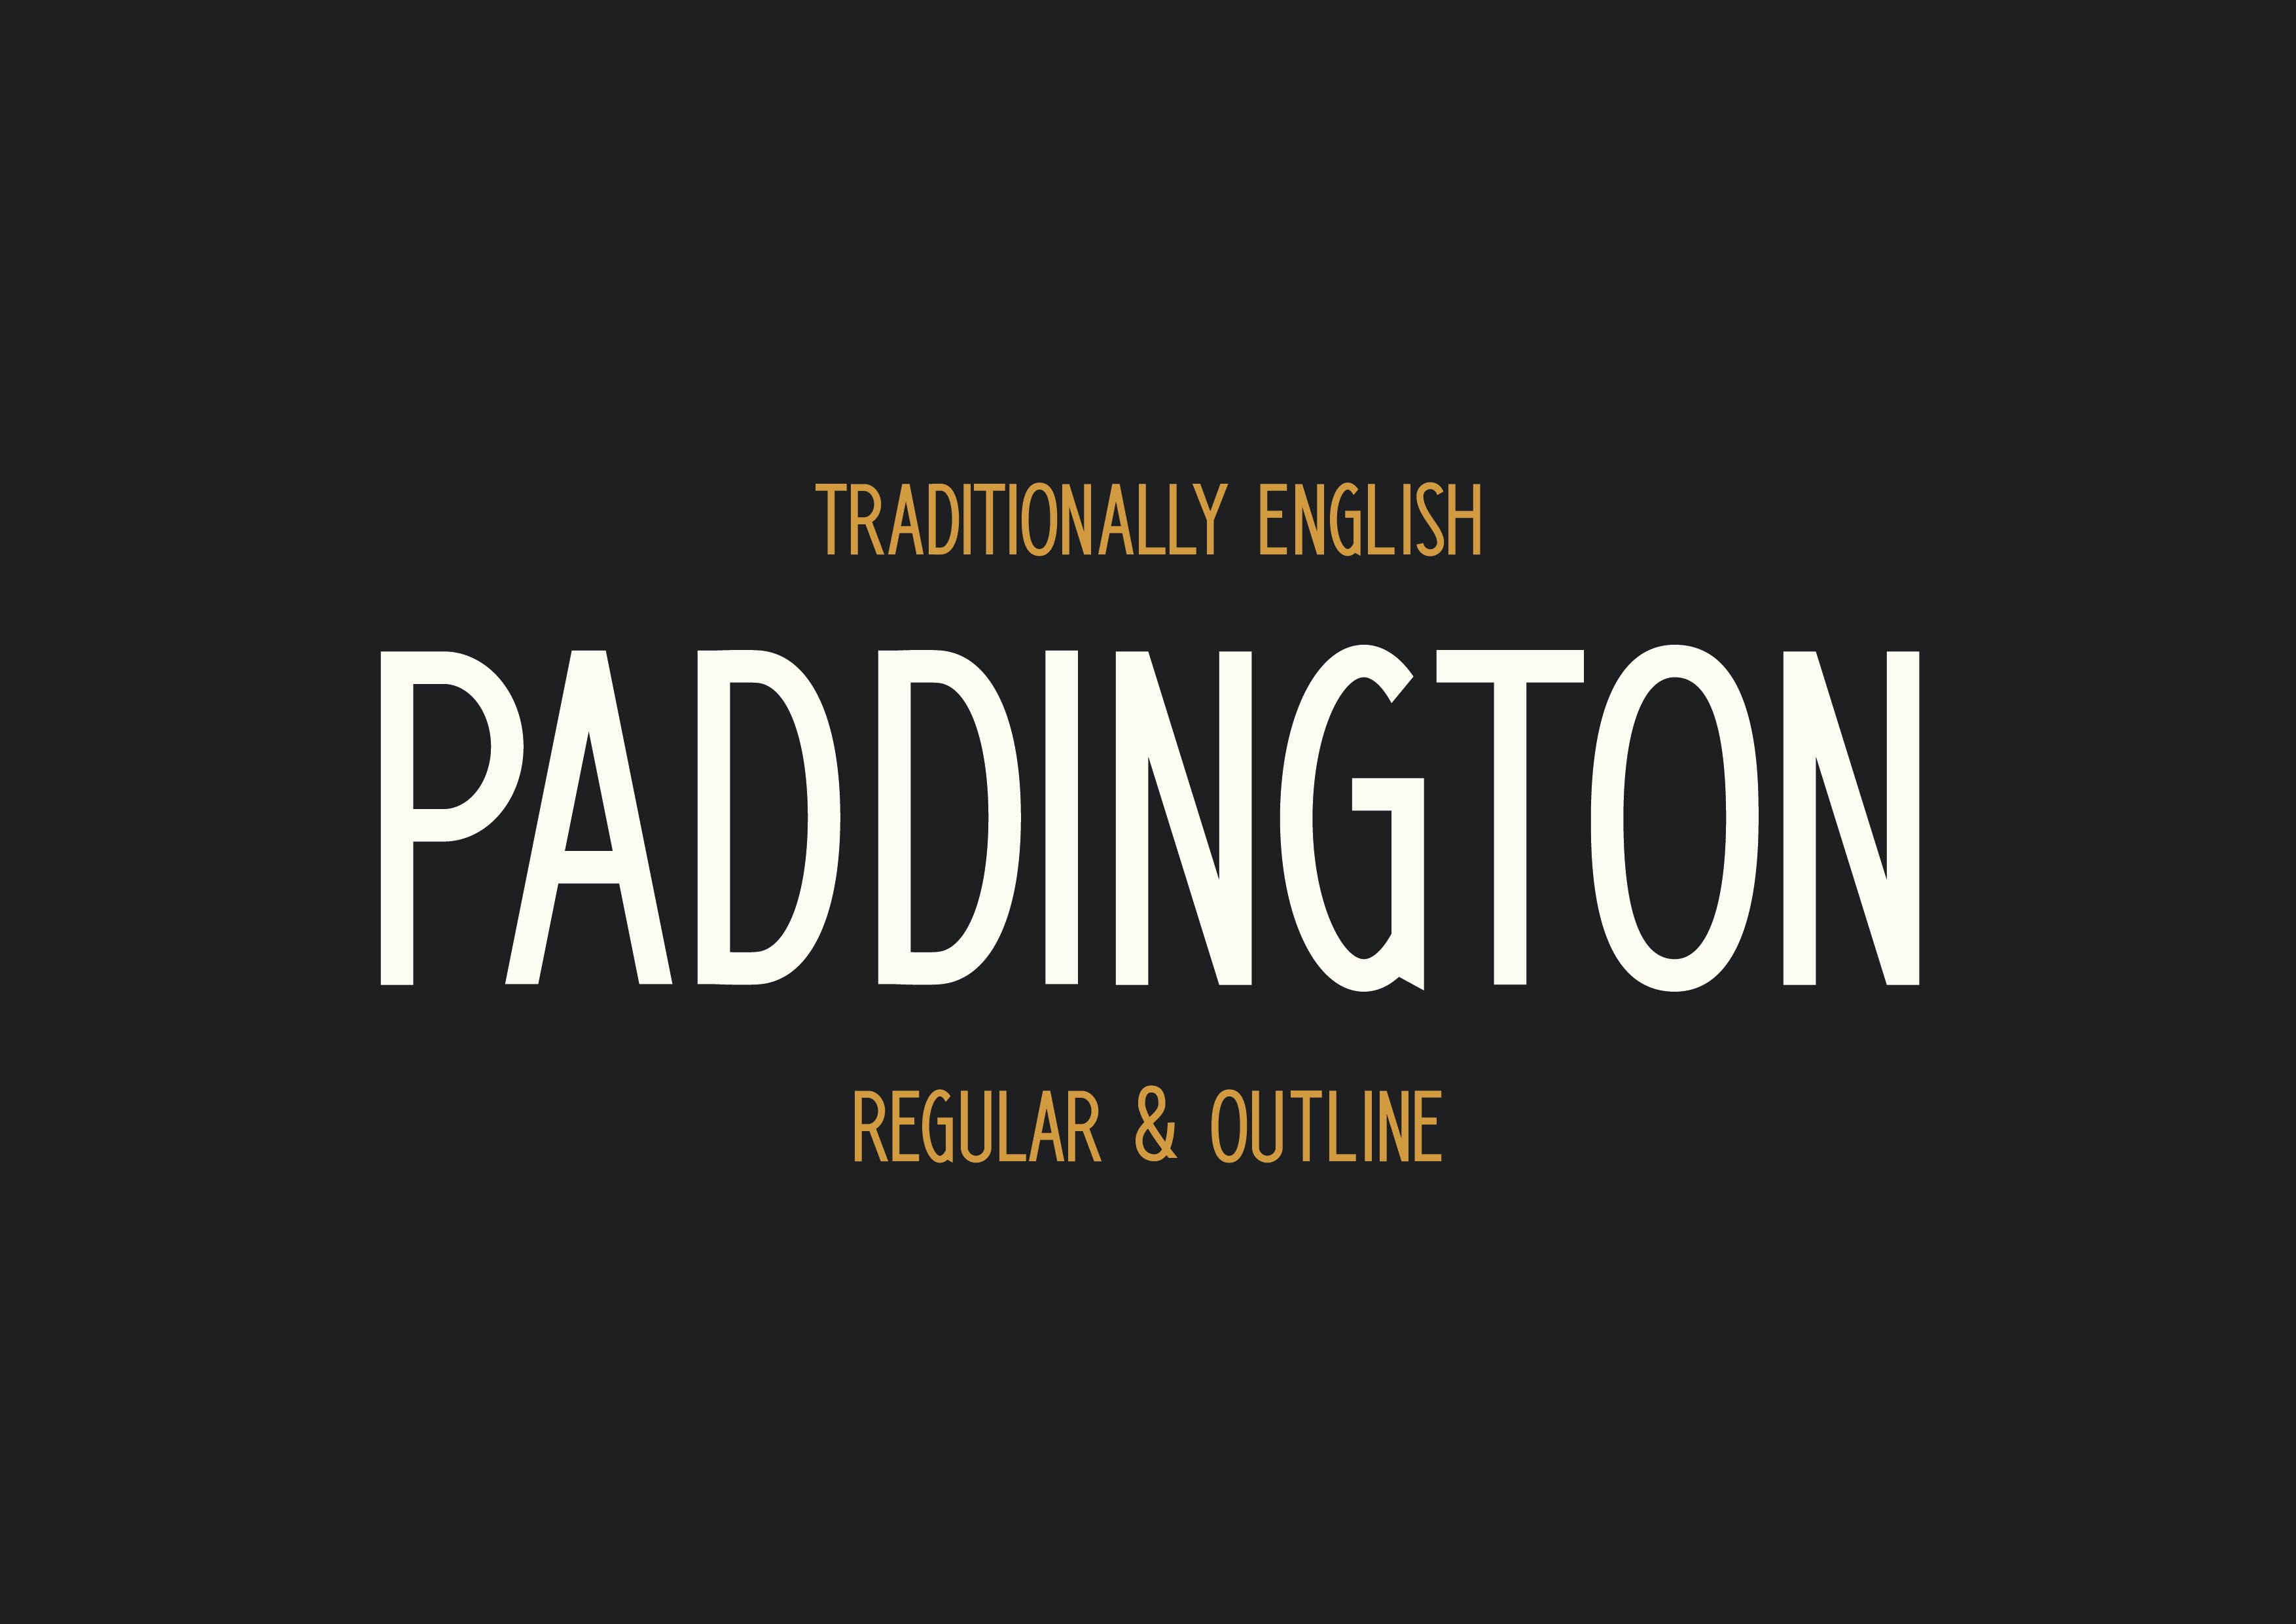 Paddington - Regular & Outline cover image.